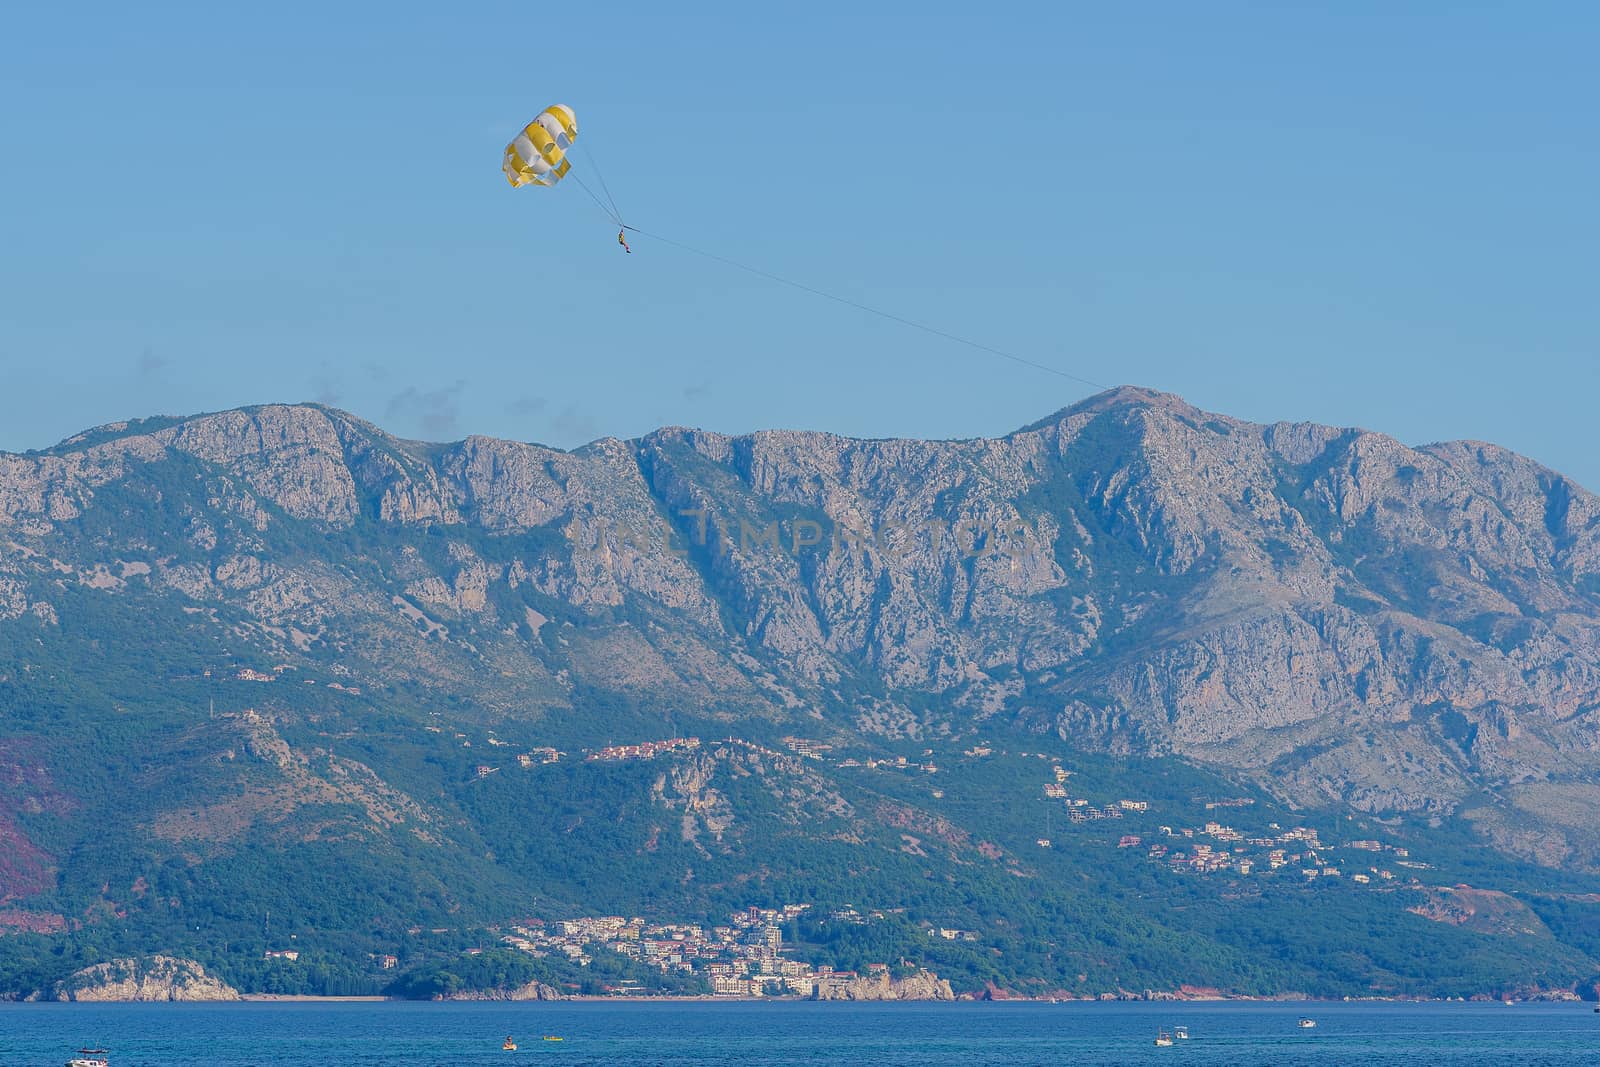 Parasailing. Man parachuting behind a boat against a blue sky